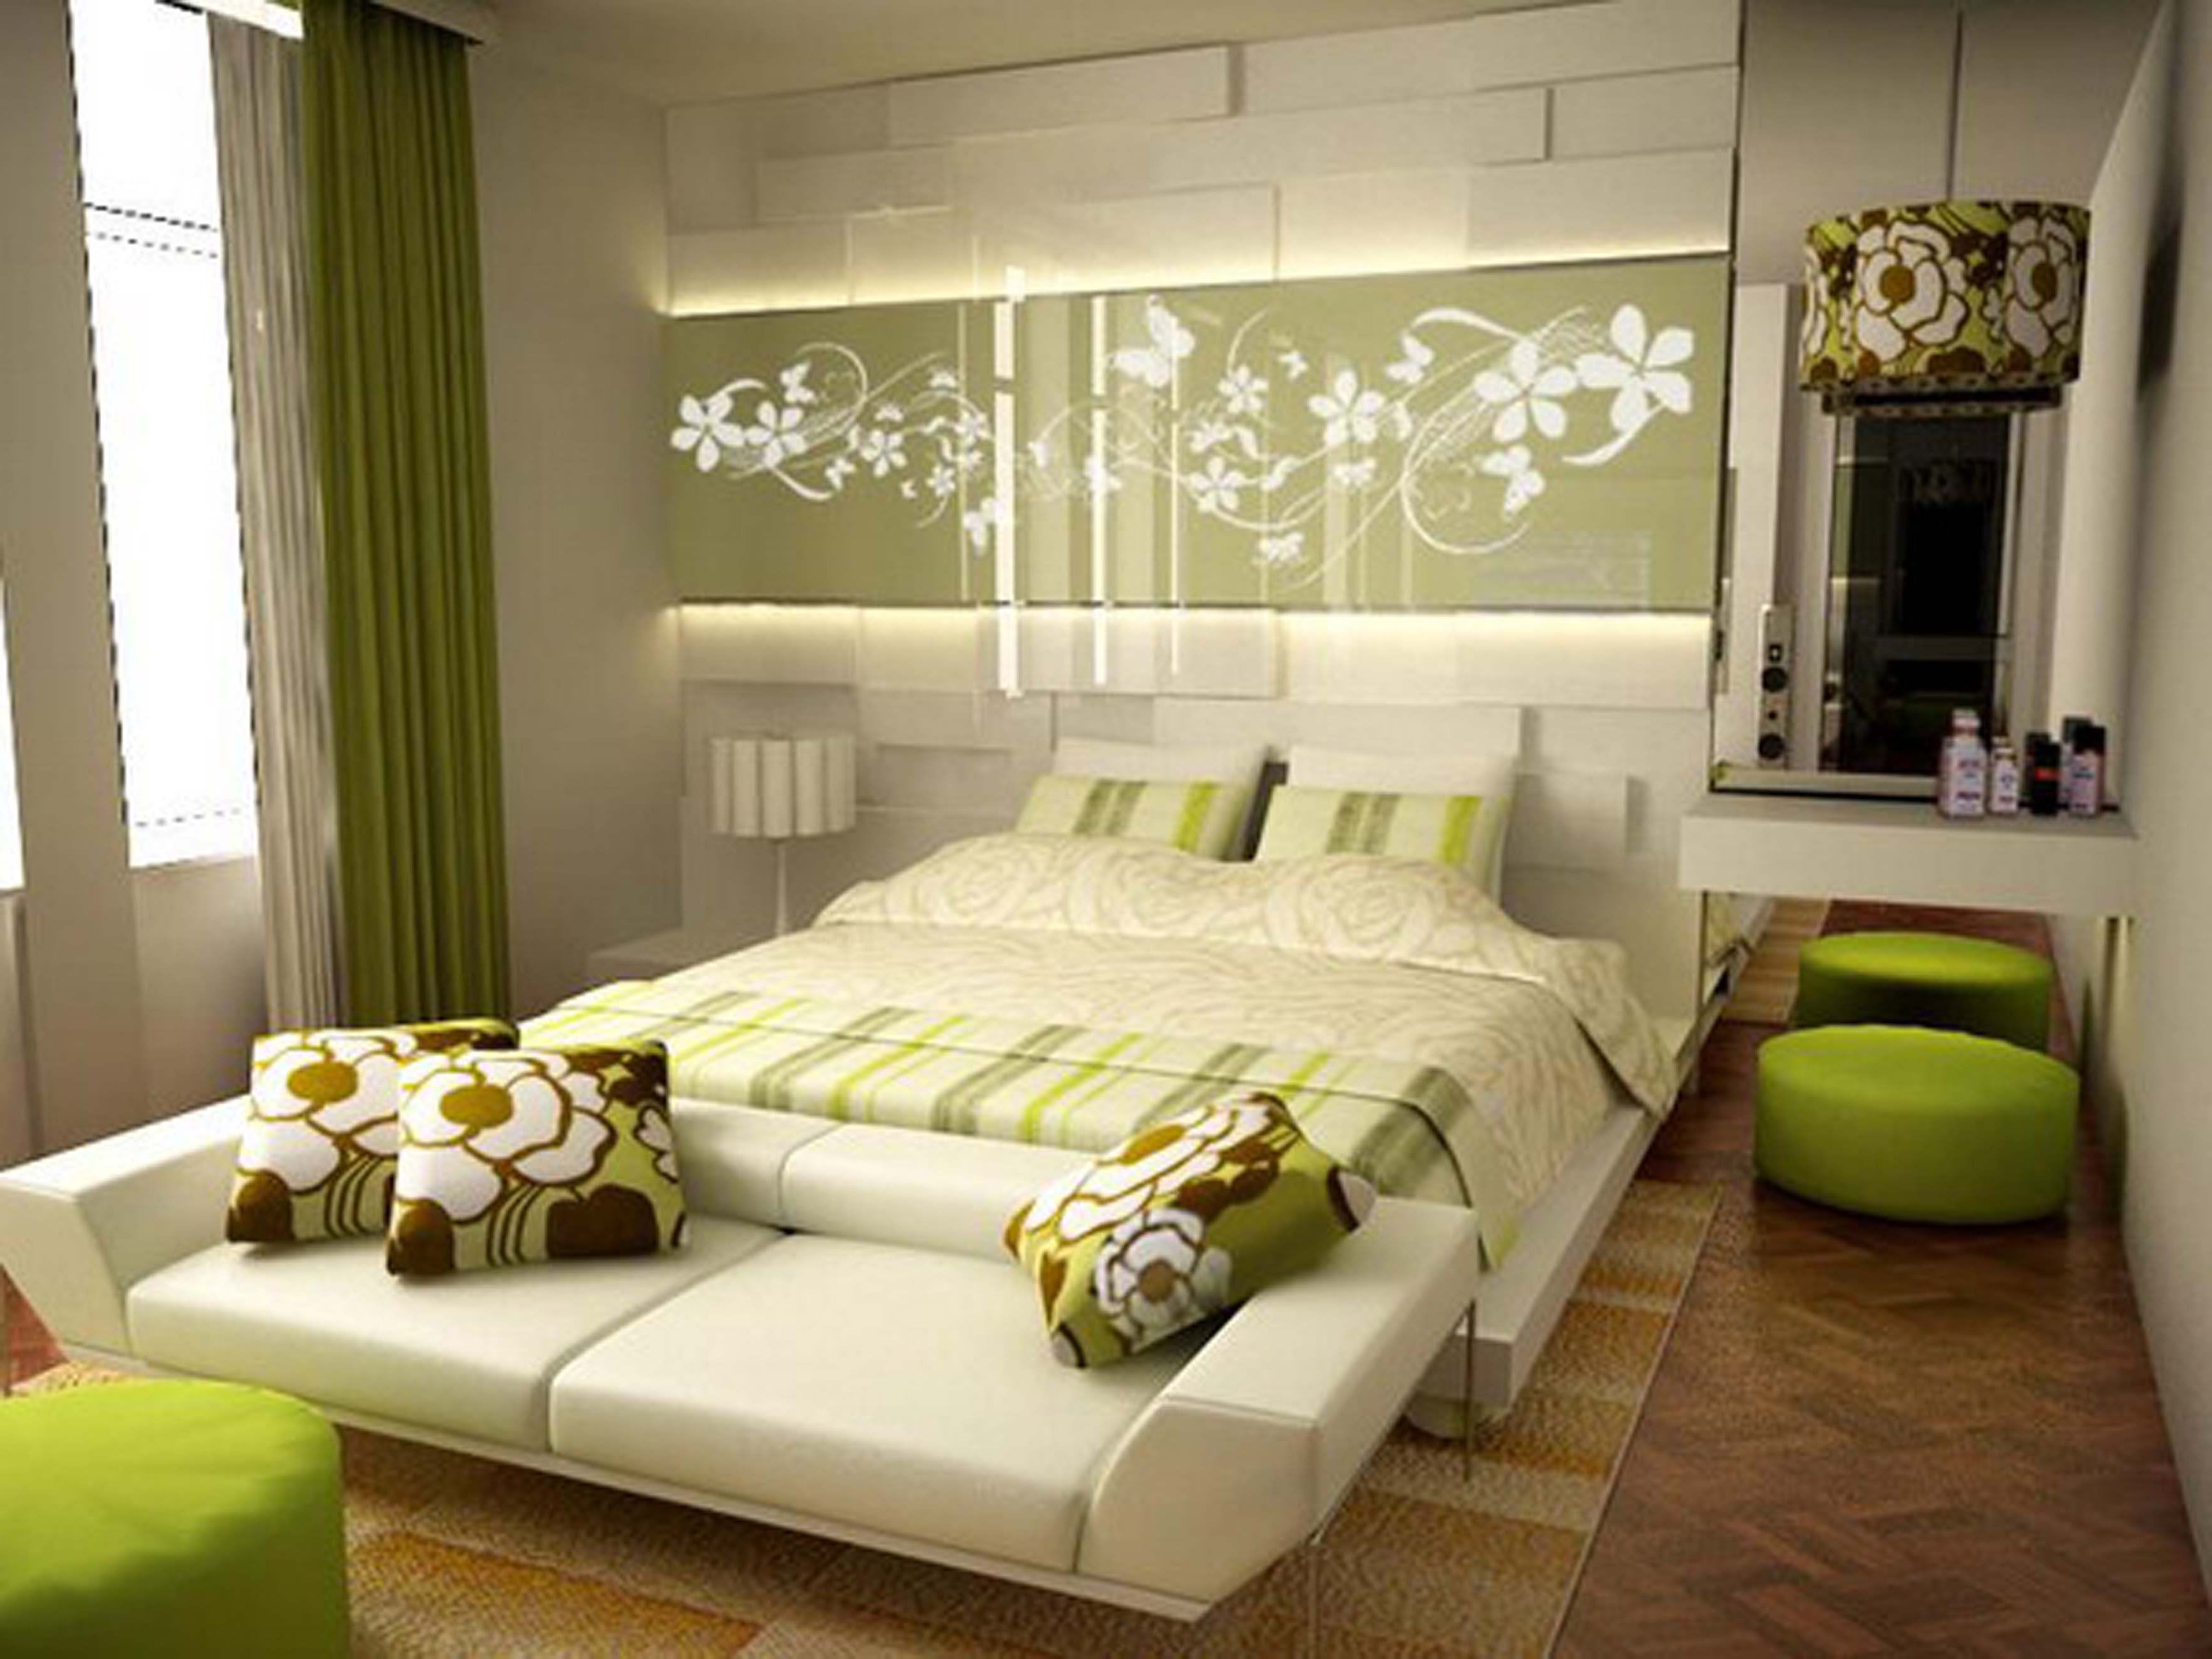 spavaća soba 9 m2 u zelenilu